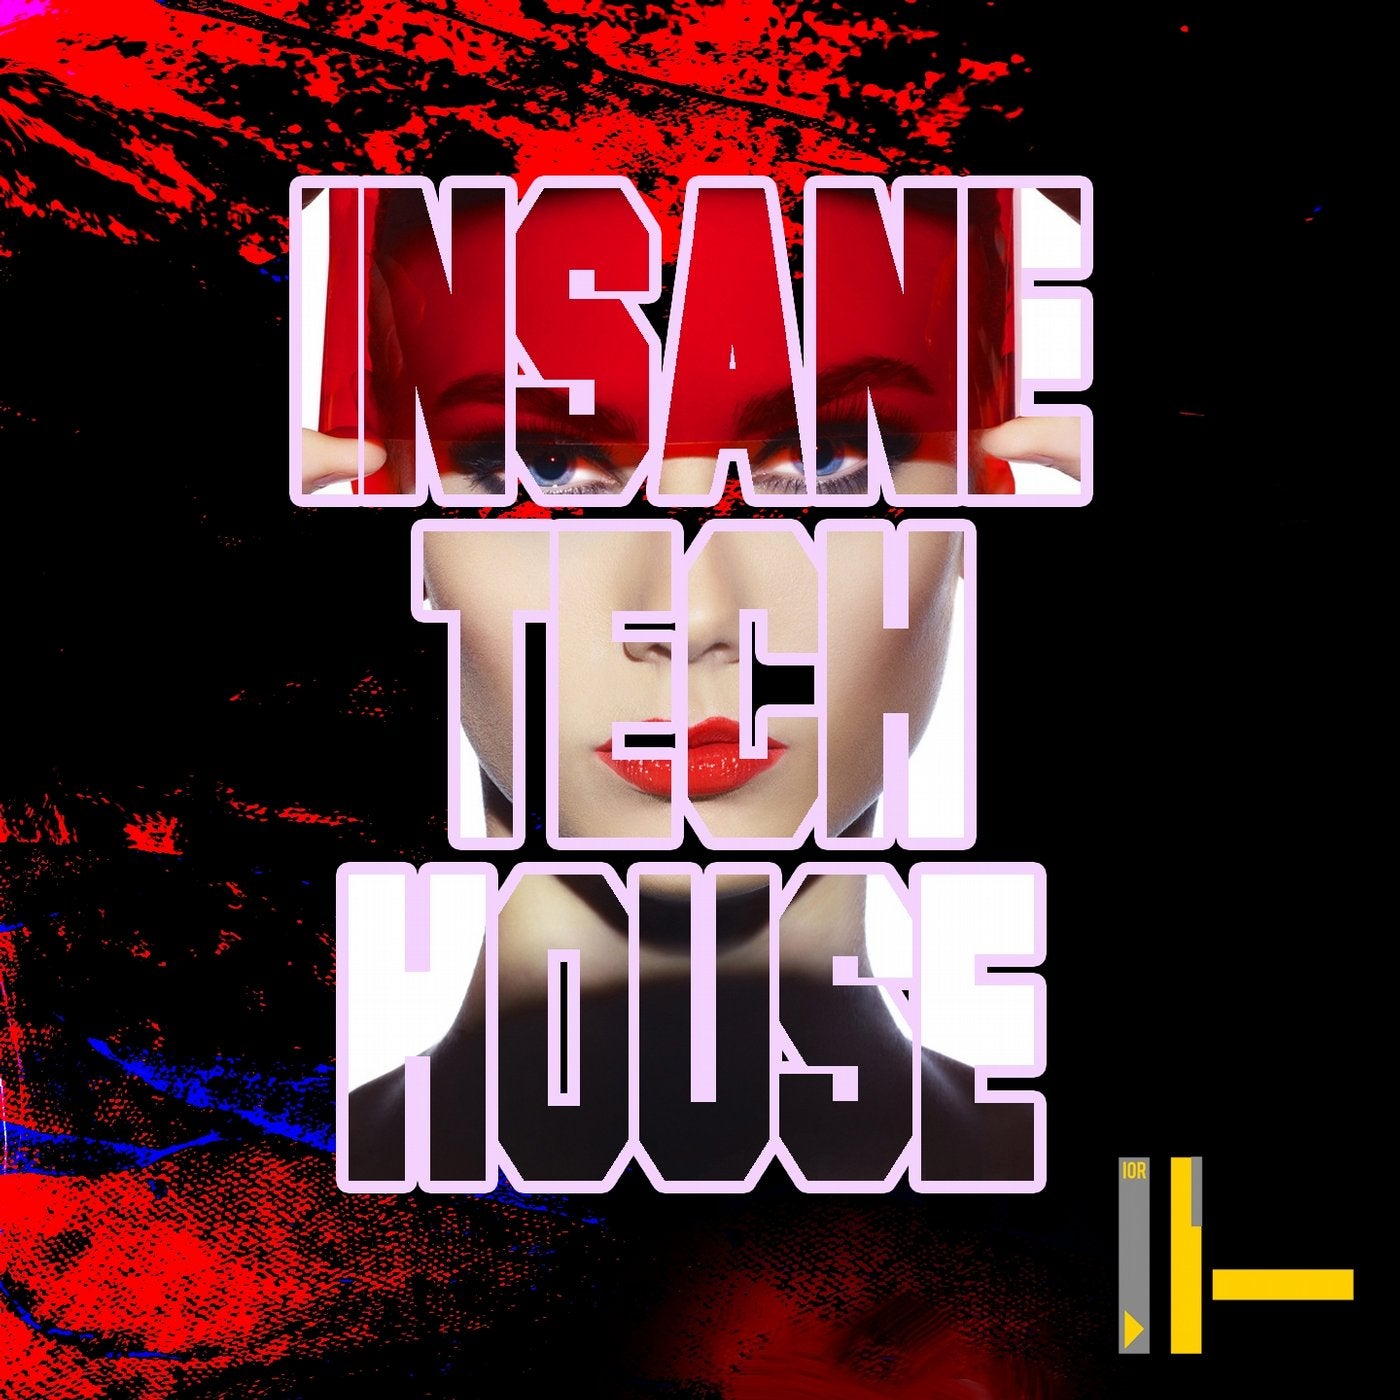 Insane Tech House